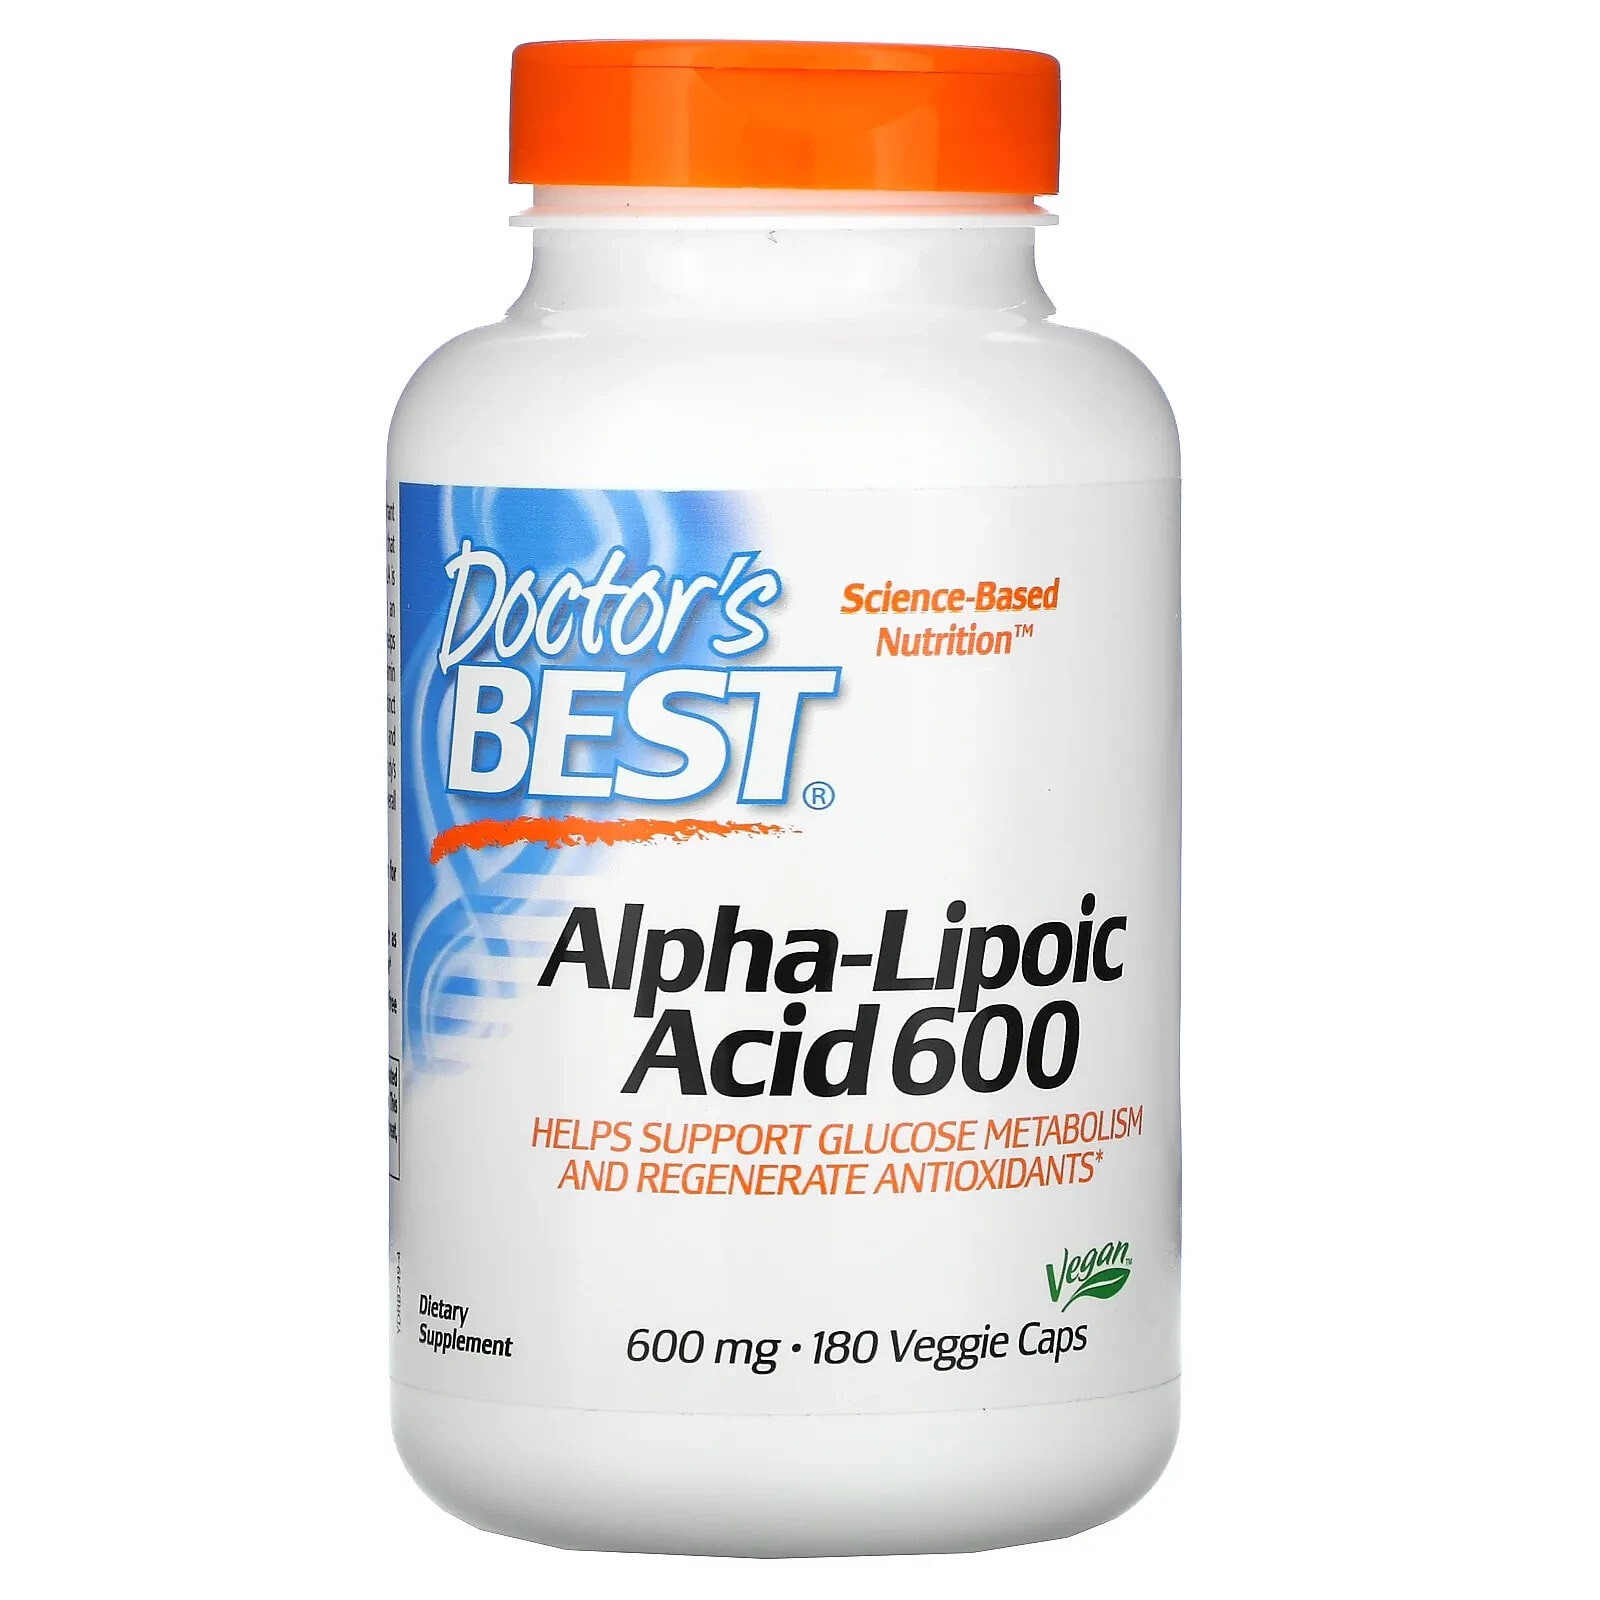 Alpha-Lipoic Acid 600, 600 mg, 180 Veggie Caps